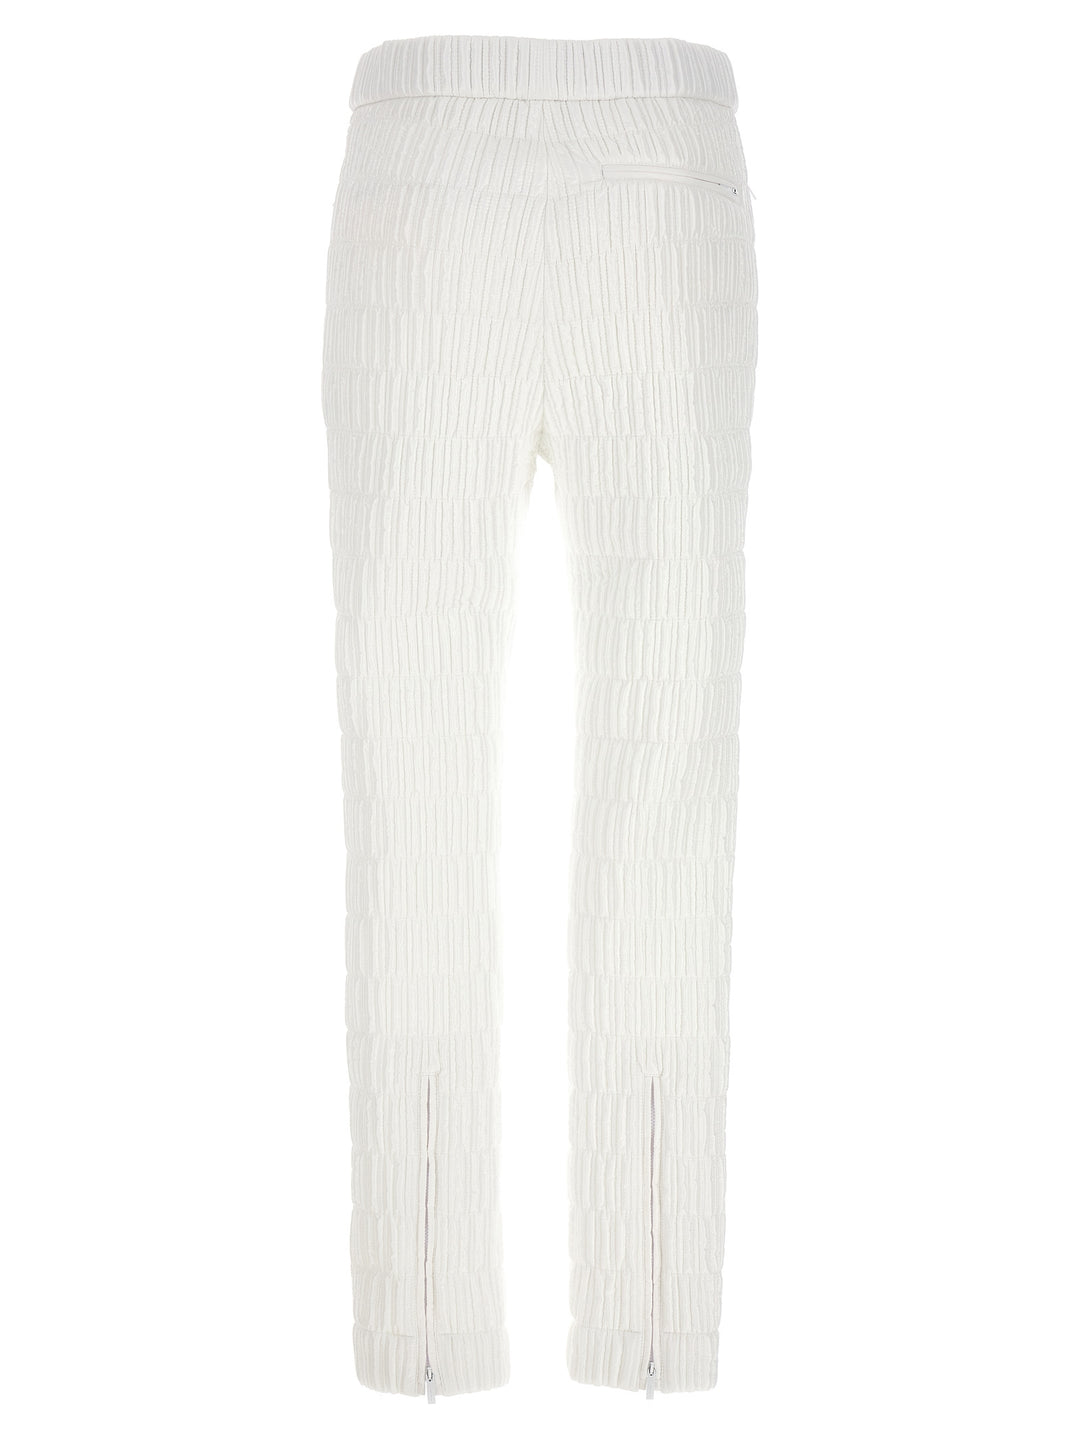 Quilted Pantaloni Bianco